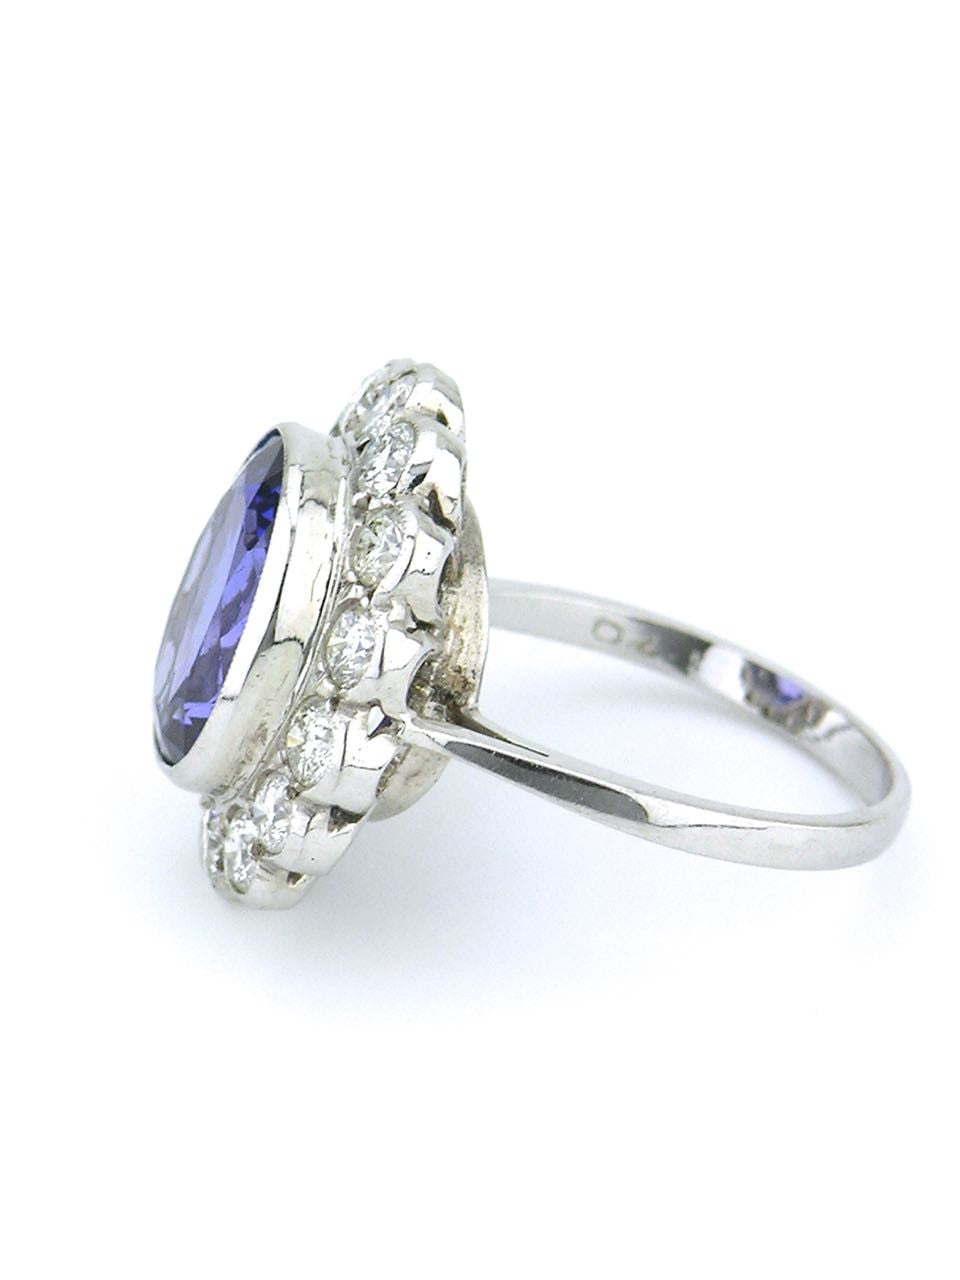 Tanzanite and diamond halo ring